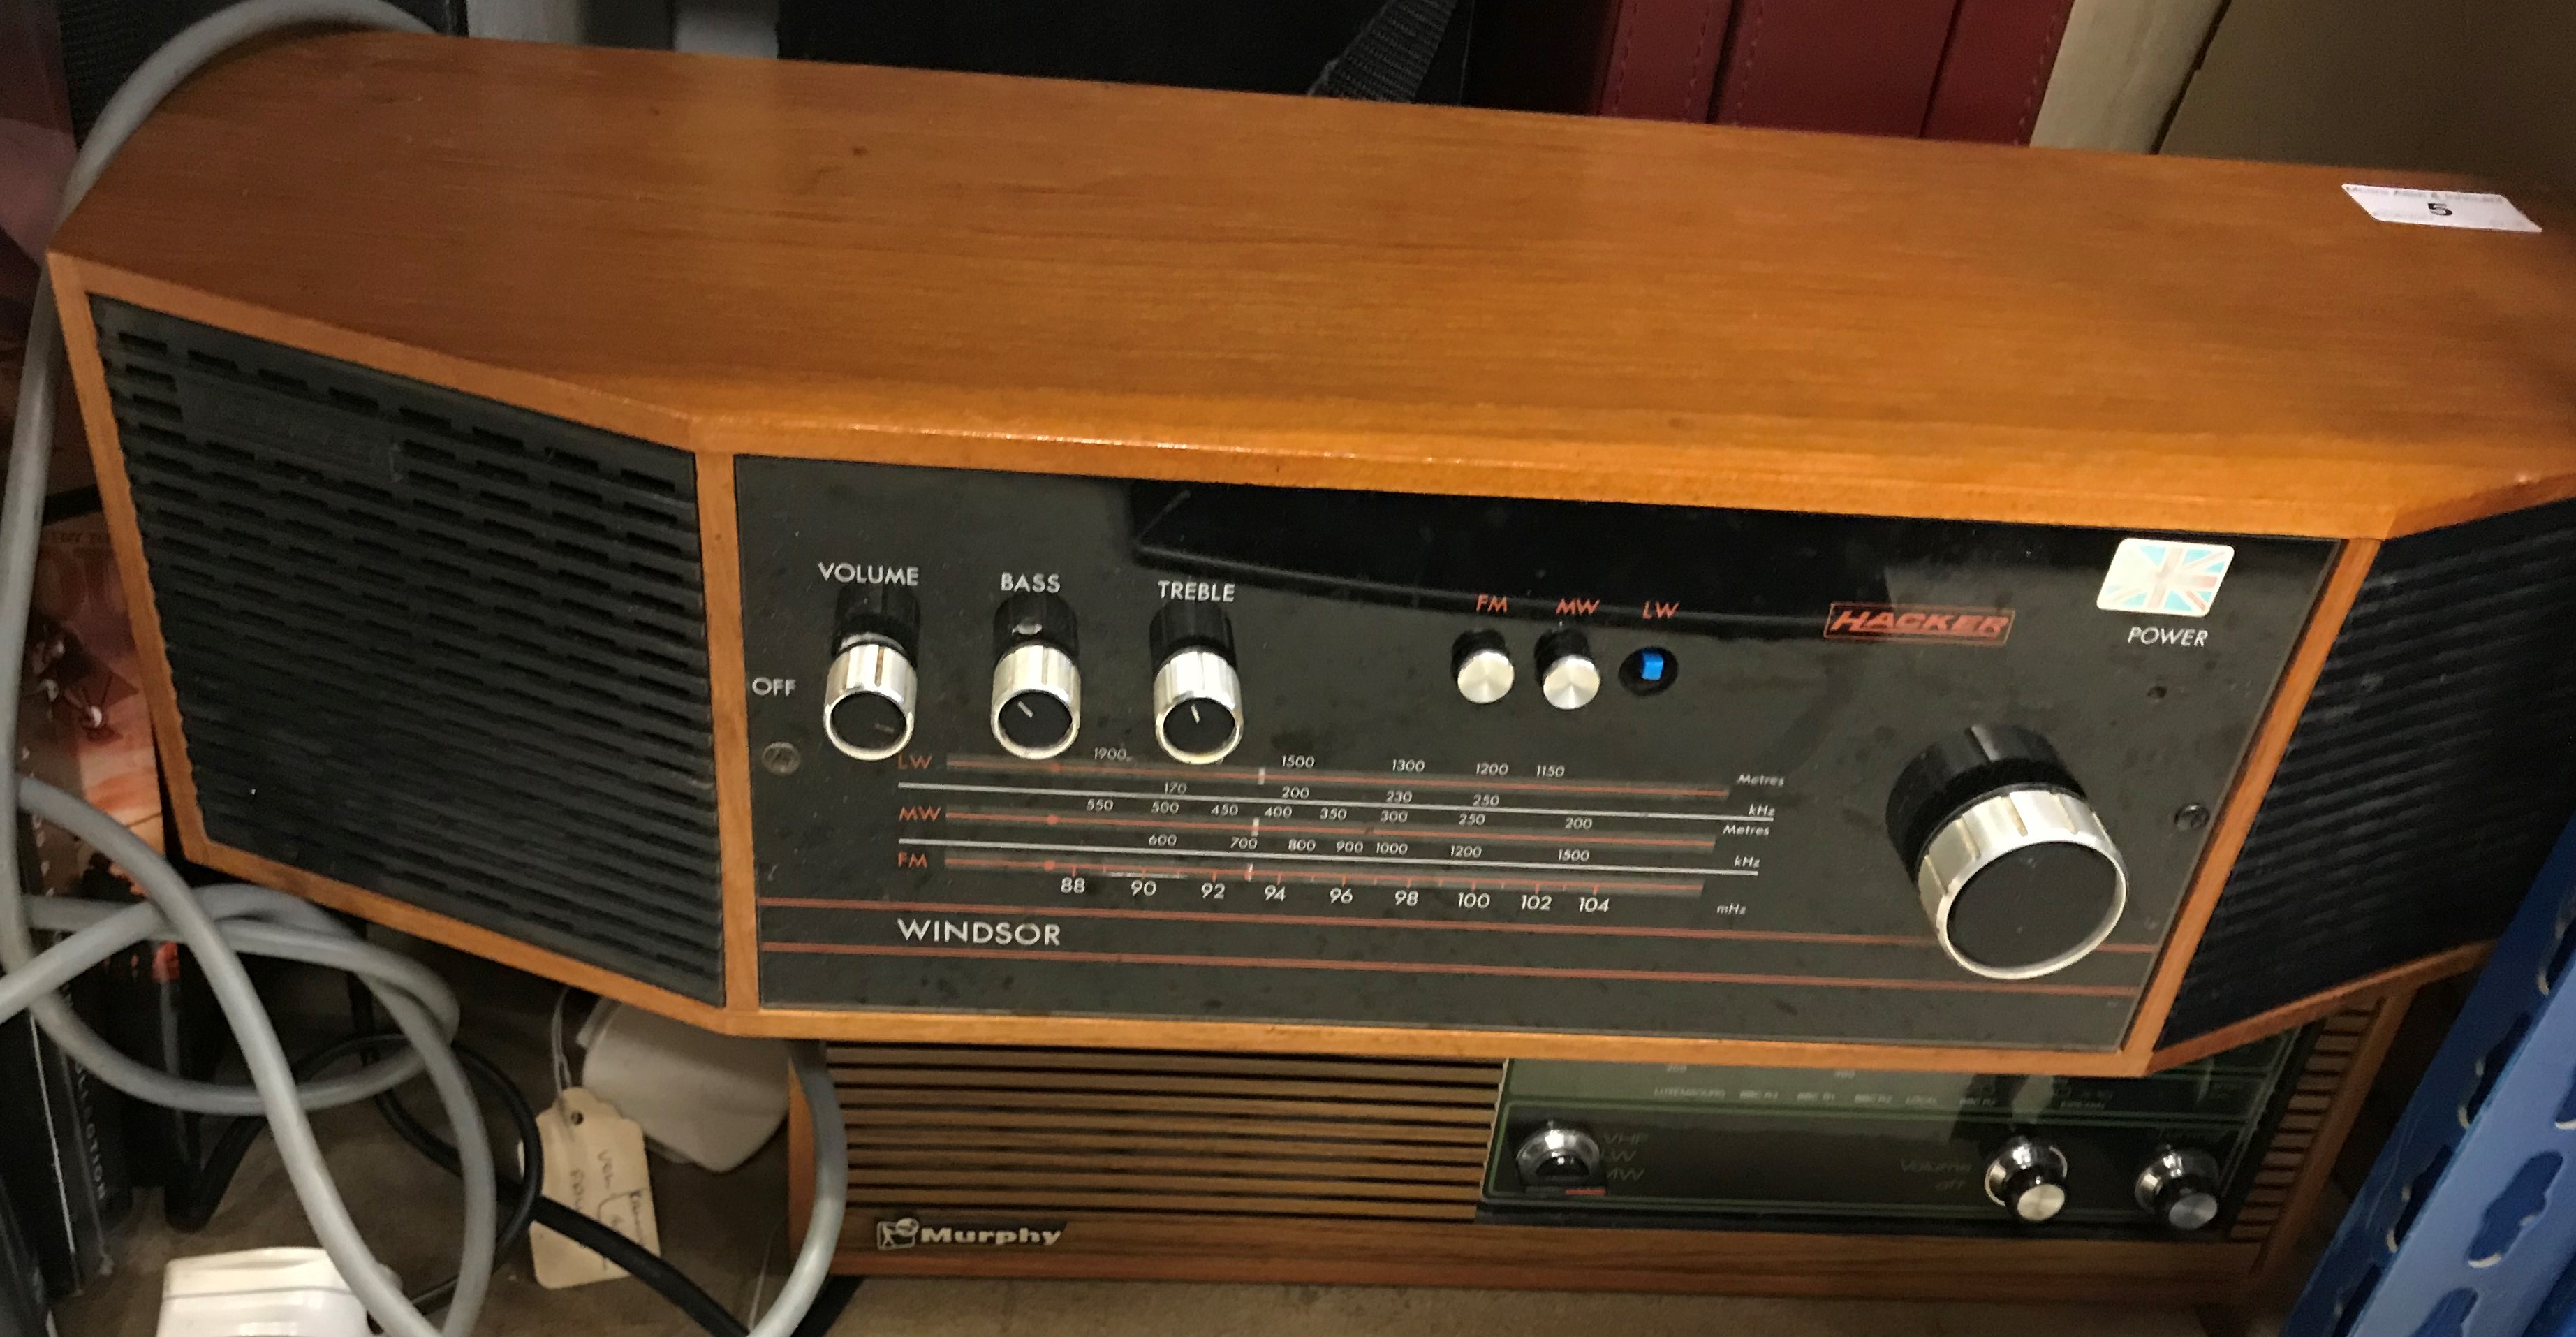 A Hacker case with Garrard record player, Murphy radio and Hacker oak cased radio, vintage Remington